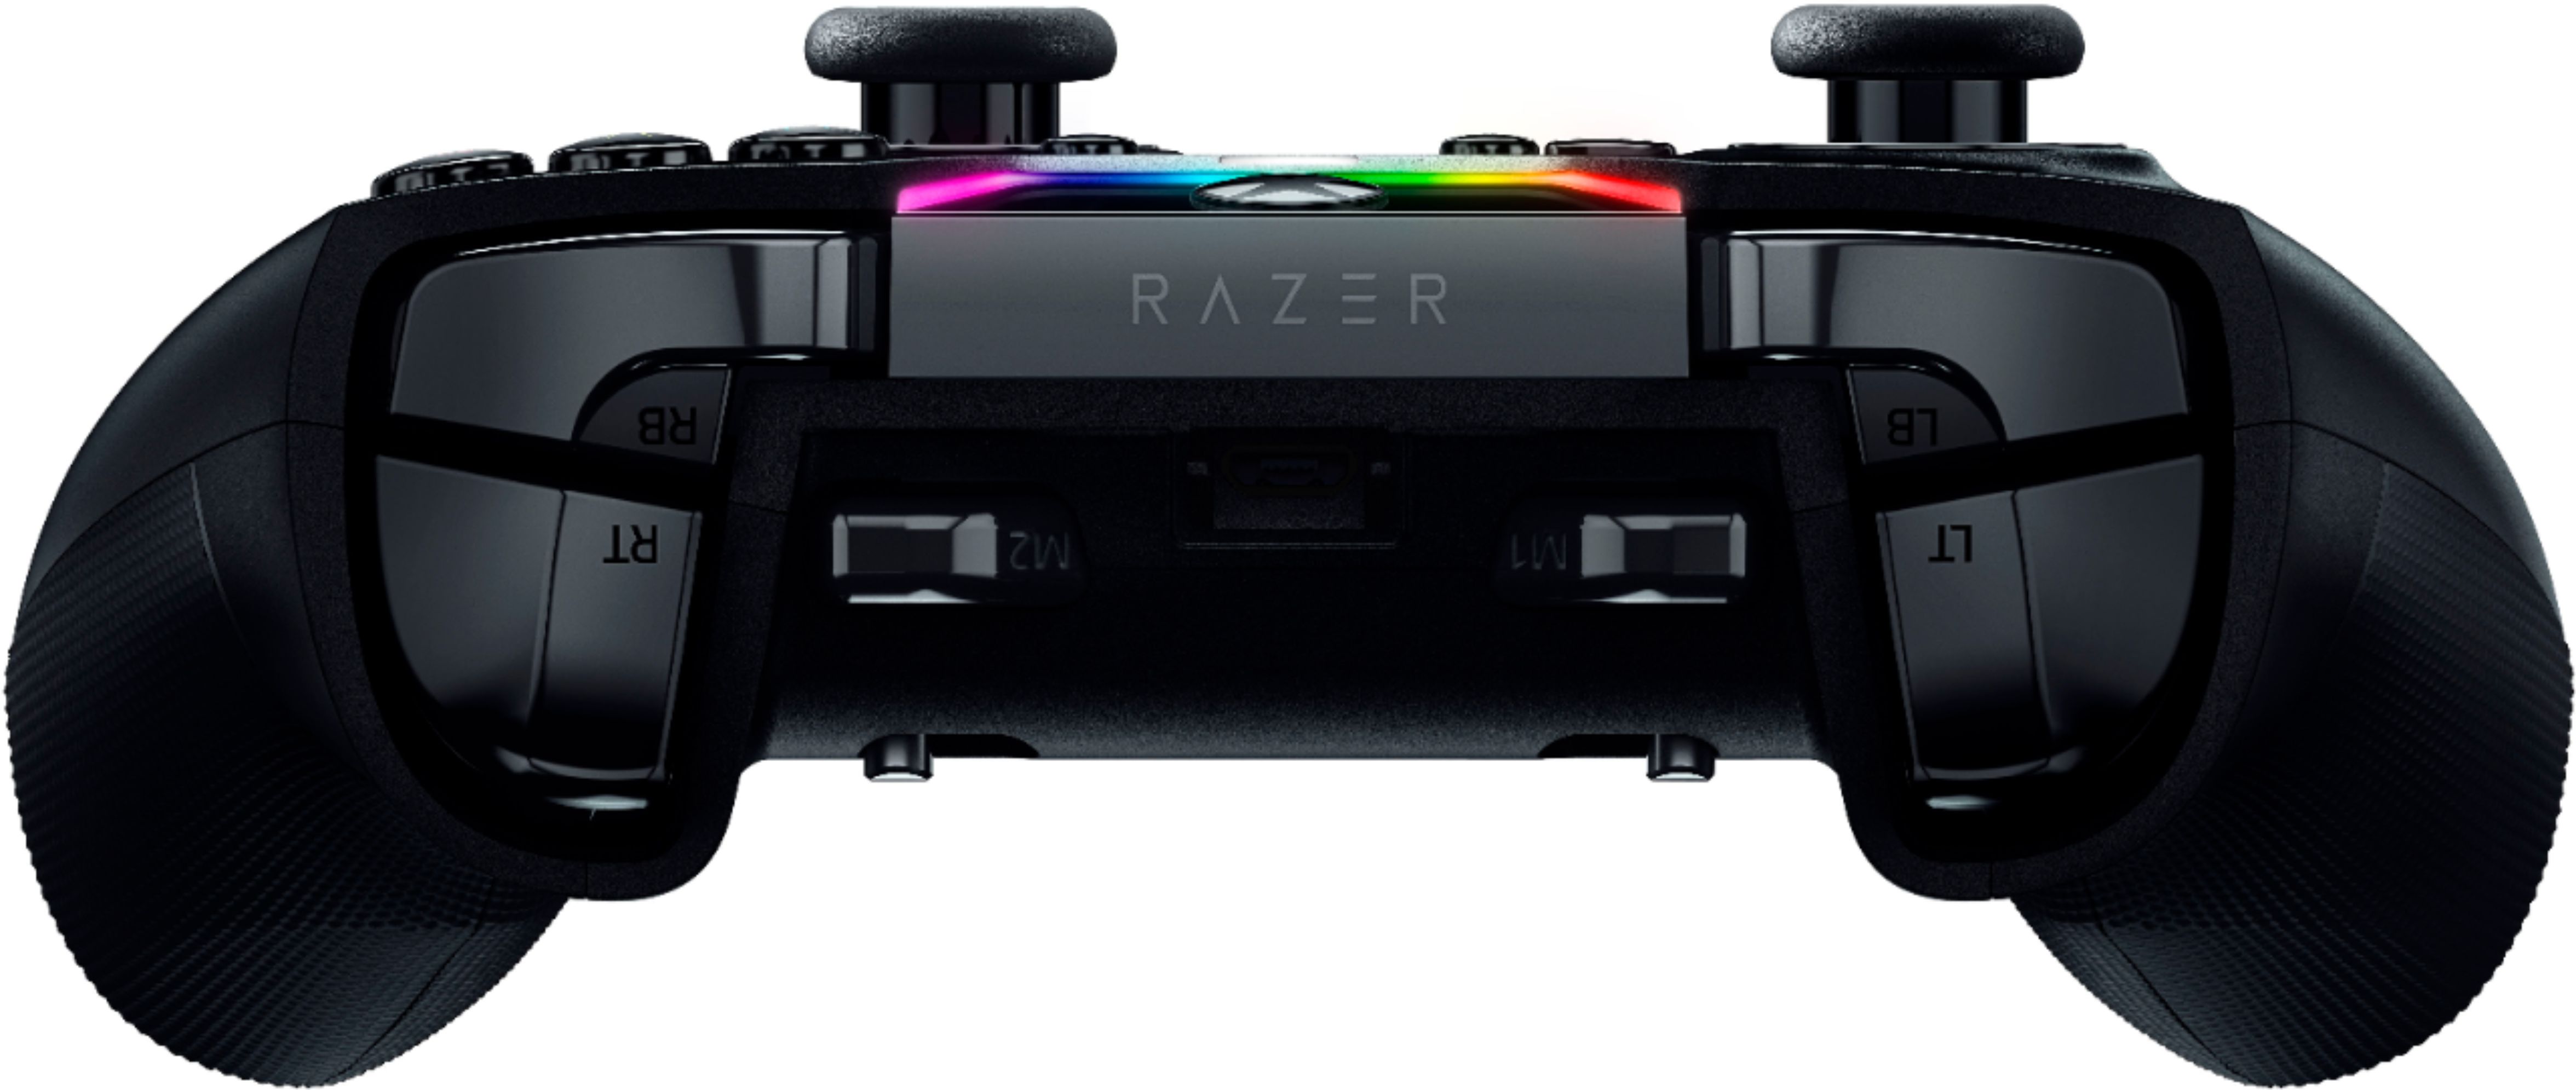 xbox one razer wolverine tournament edition wired gaming controller